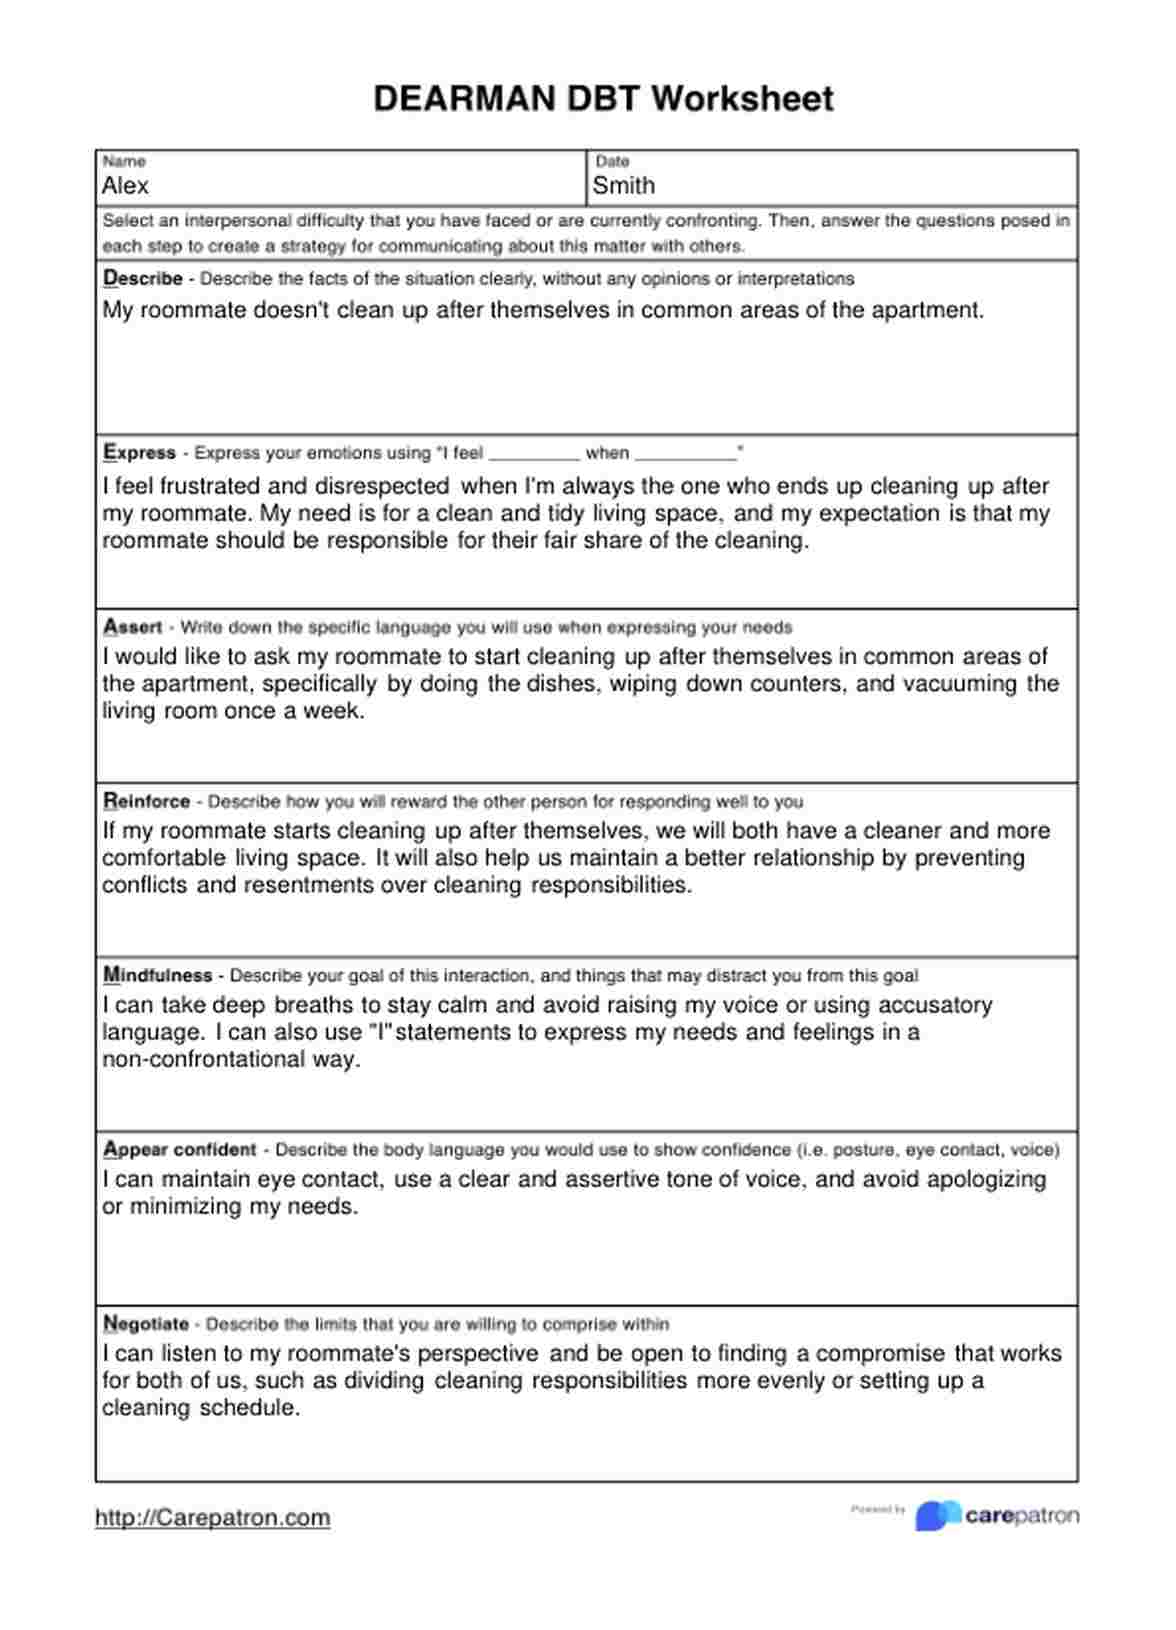 Dearman DBT Worksheets PDF Example